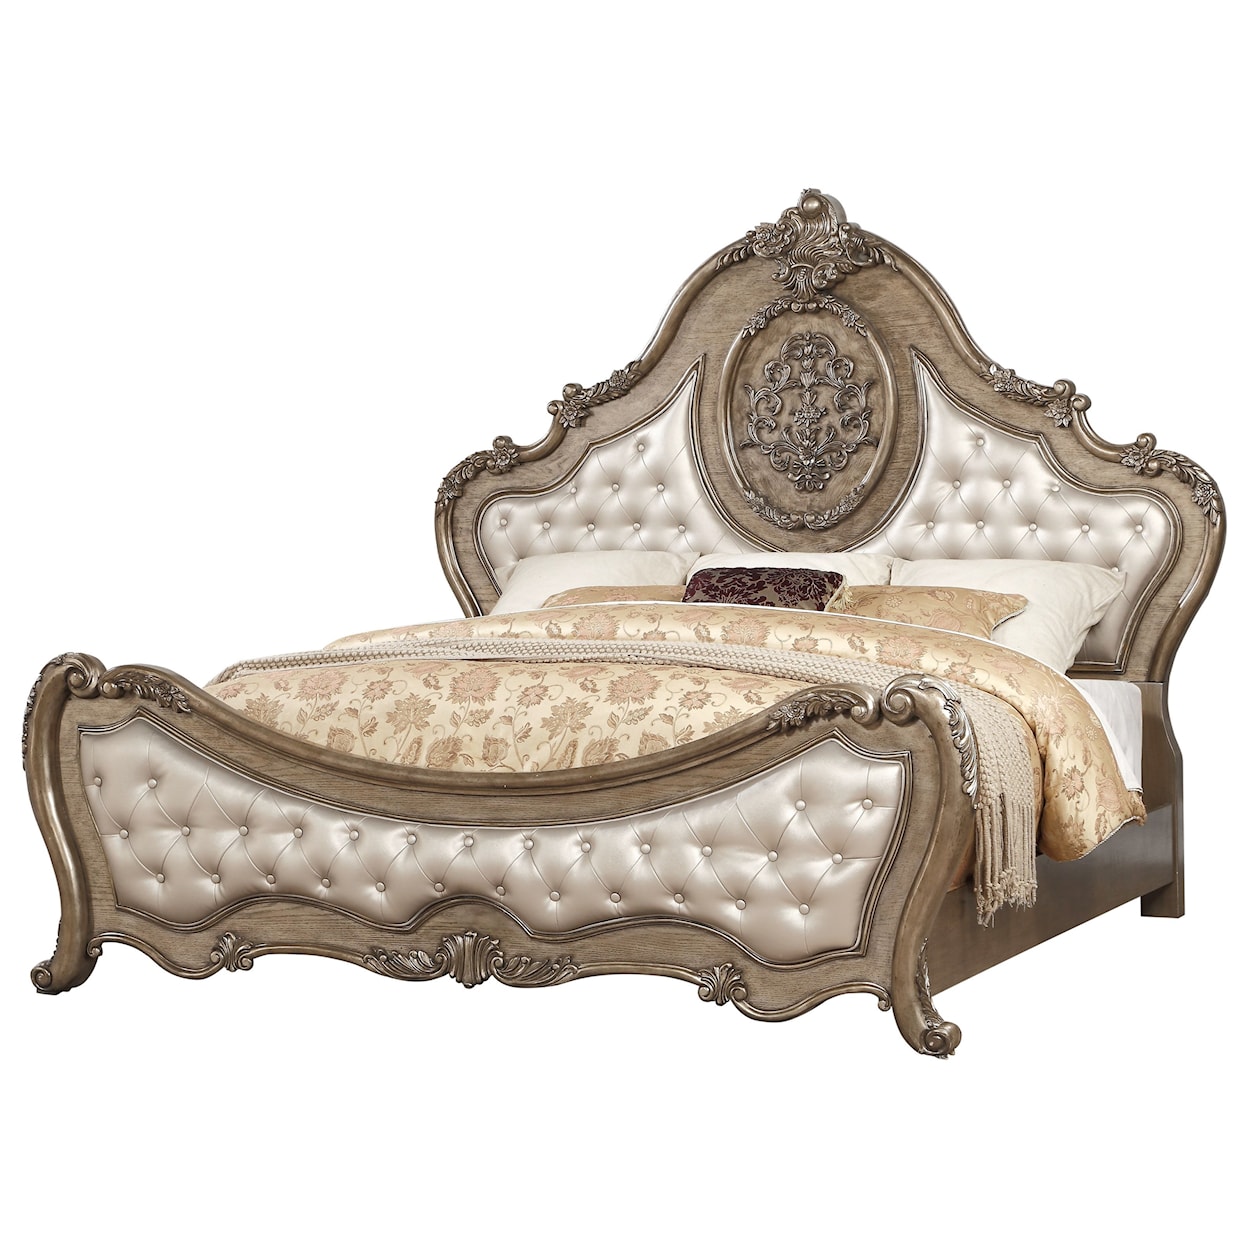 Acme Furniture Ragenardus California King Bed